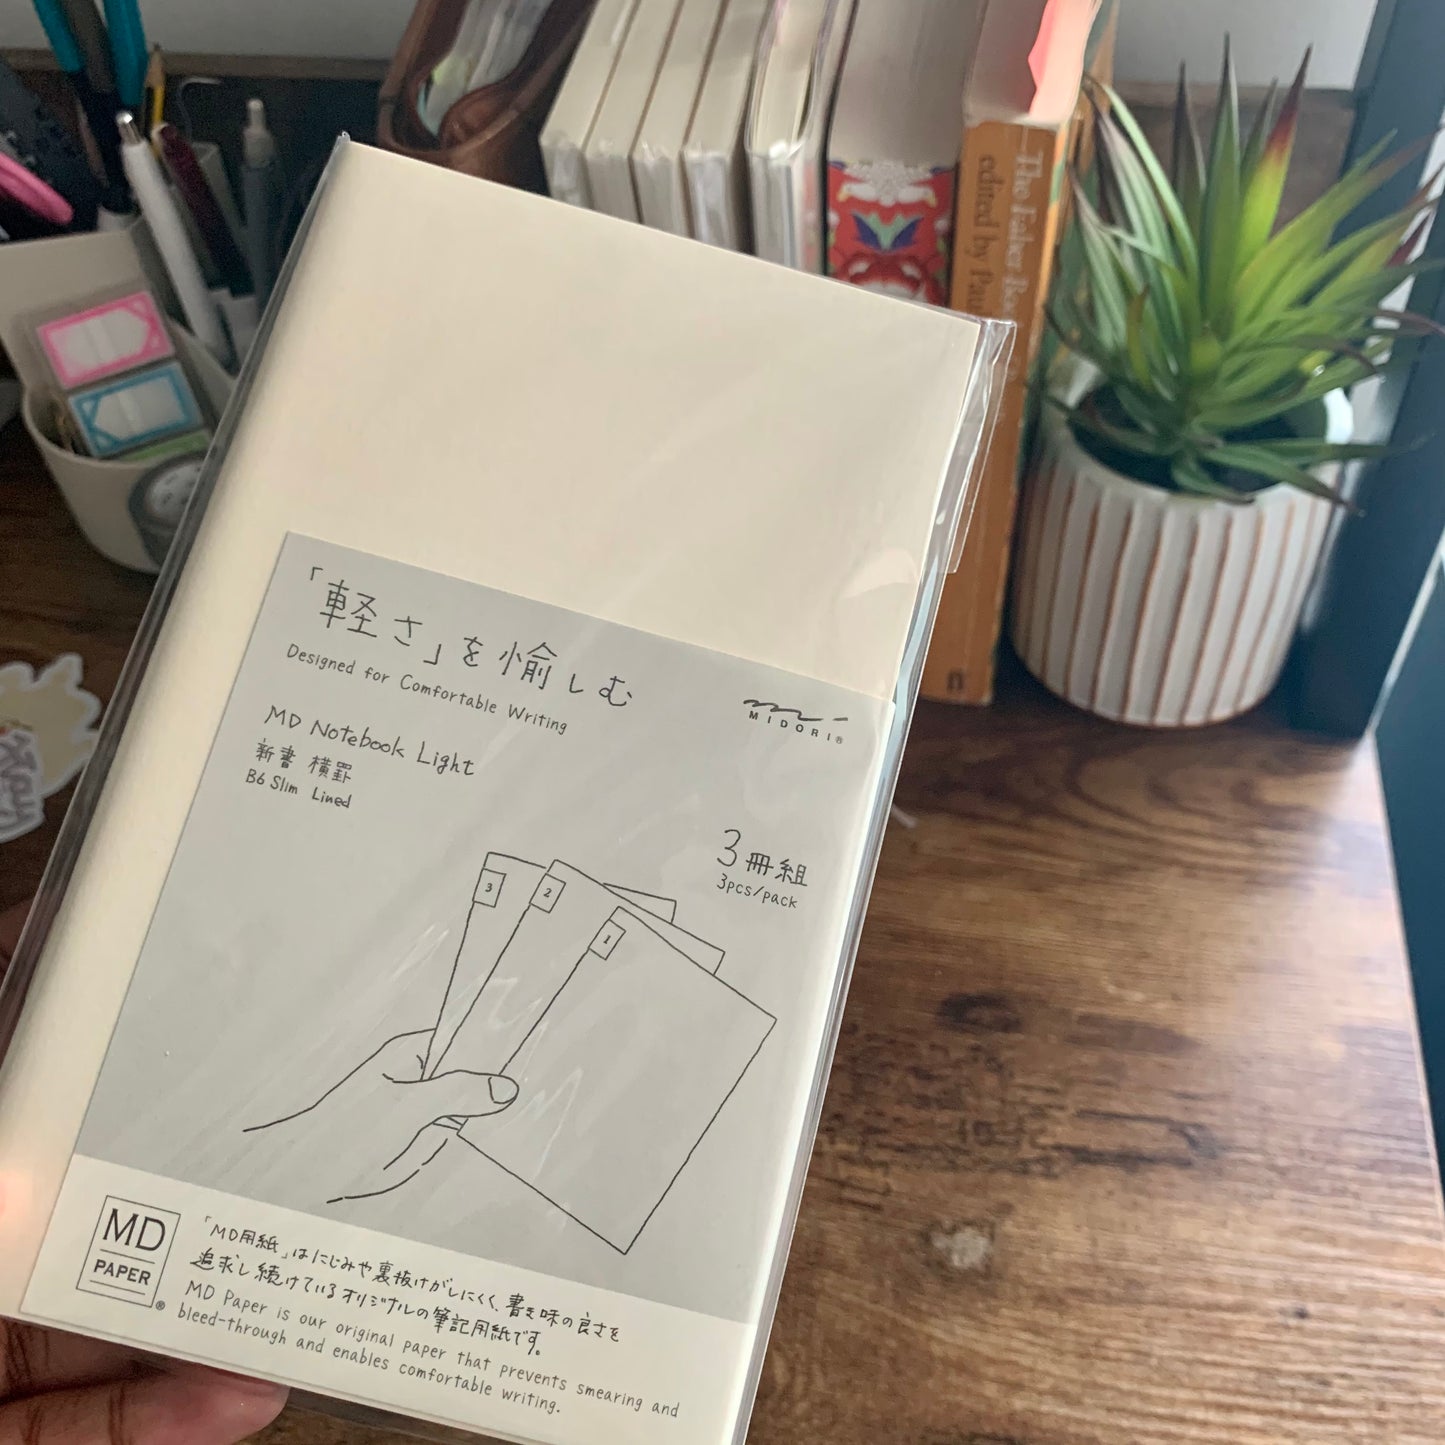 MD paper - Midori B6 Slim light notebook - Lined Paper